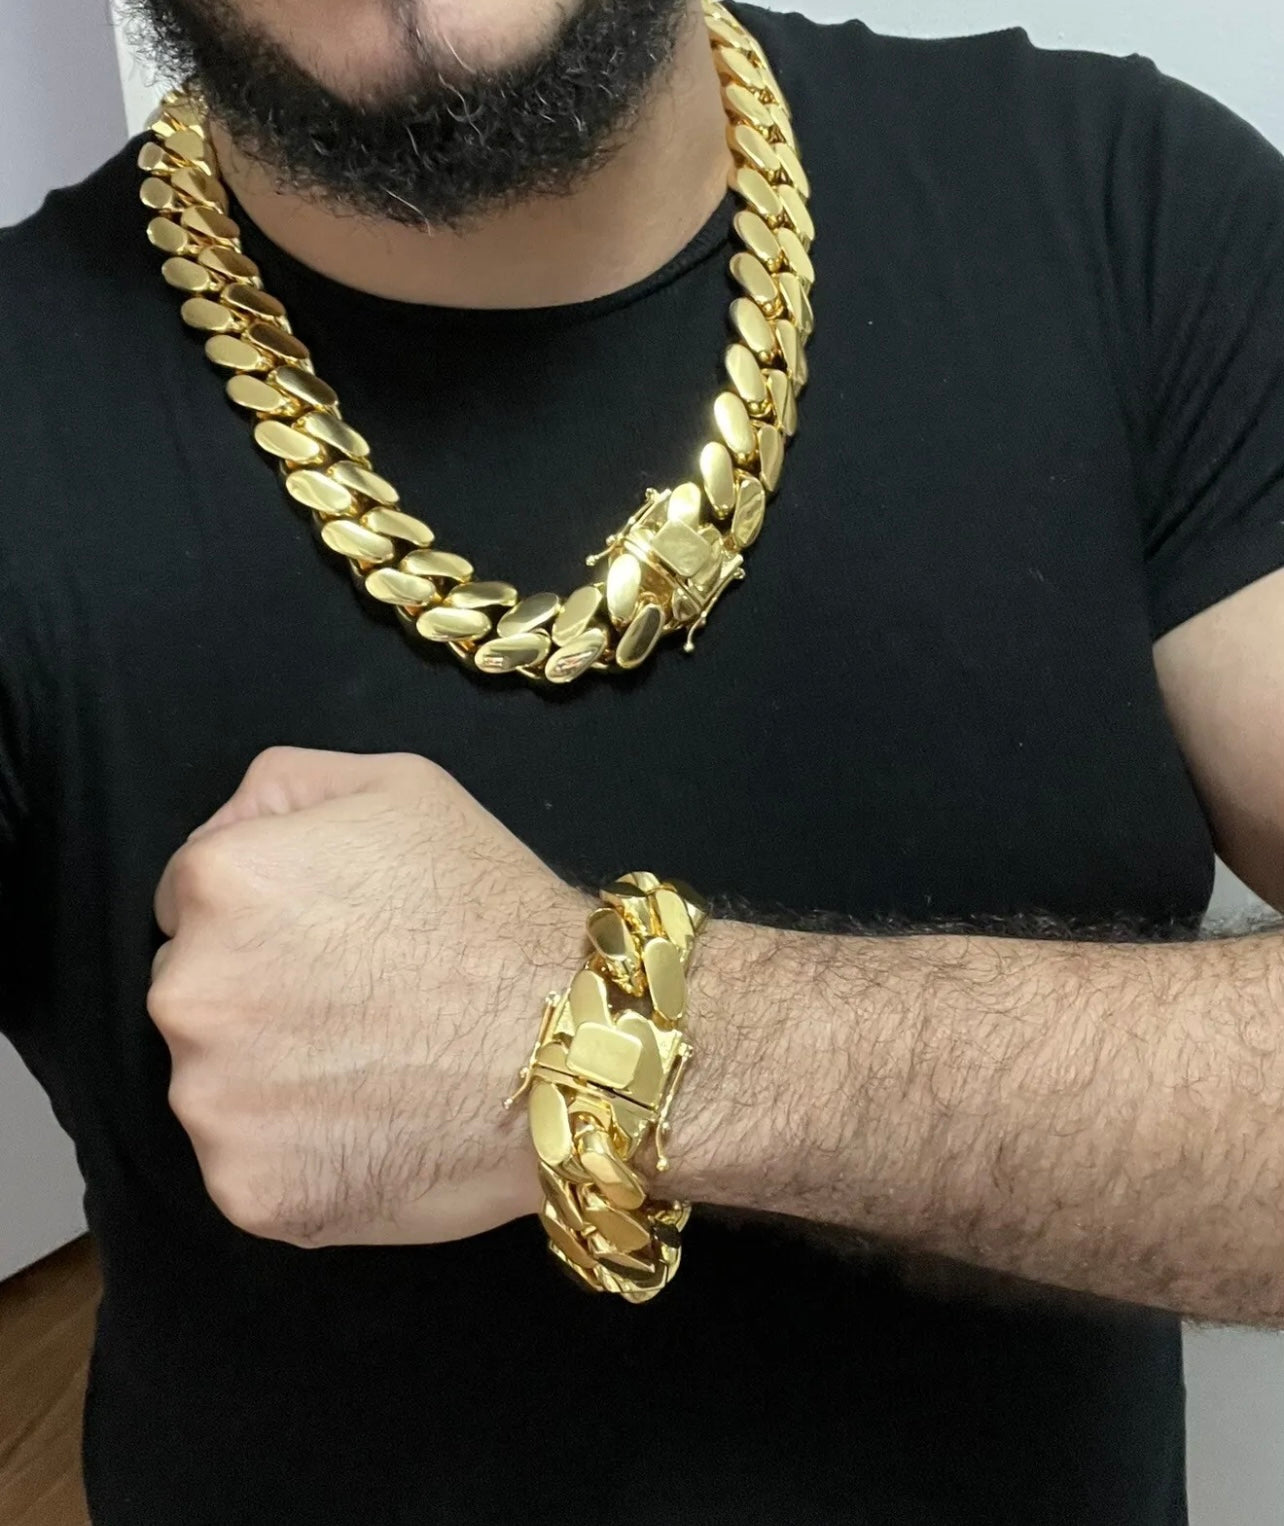 14k gold bonded chain and bracelet set "1 chain 1 bracelet set"